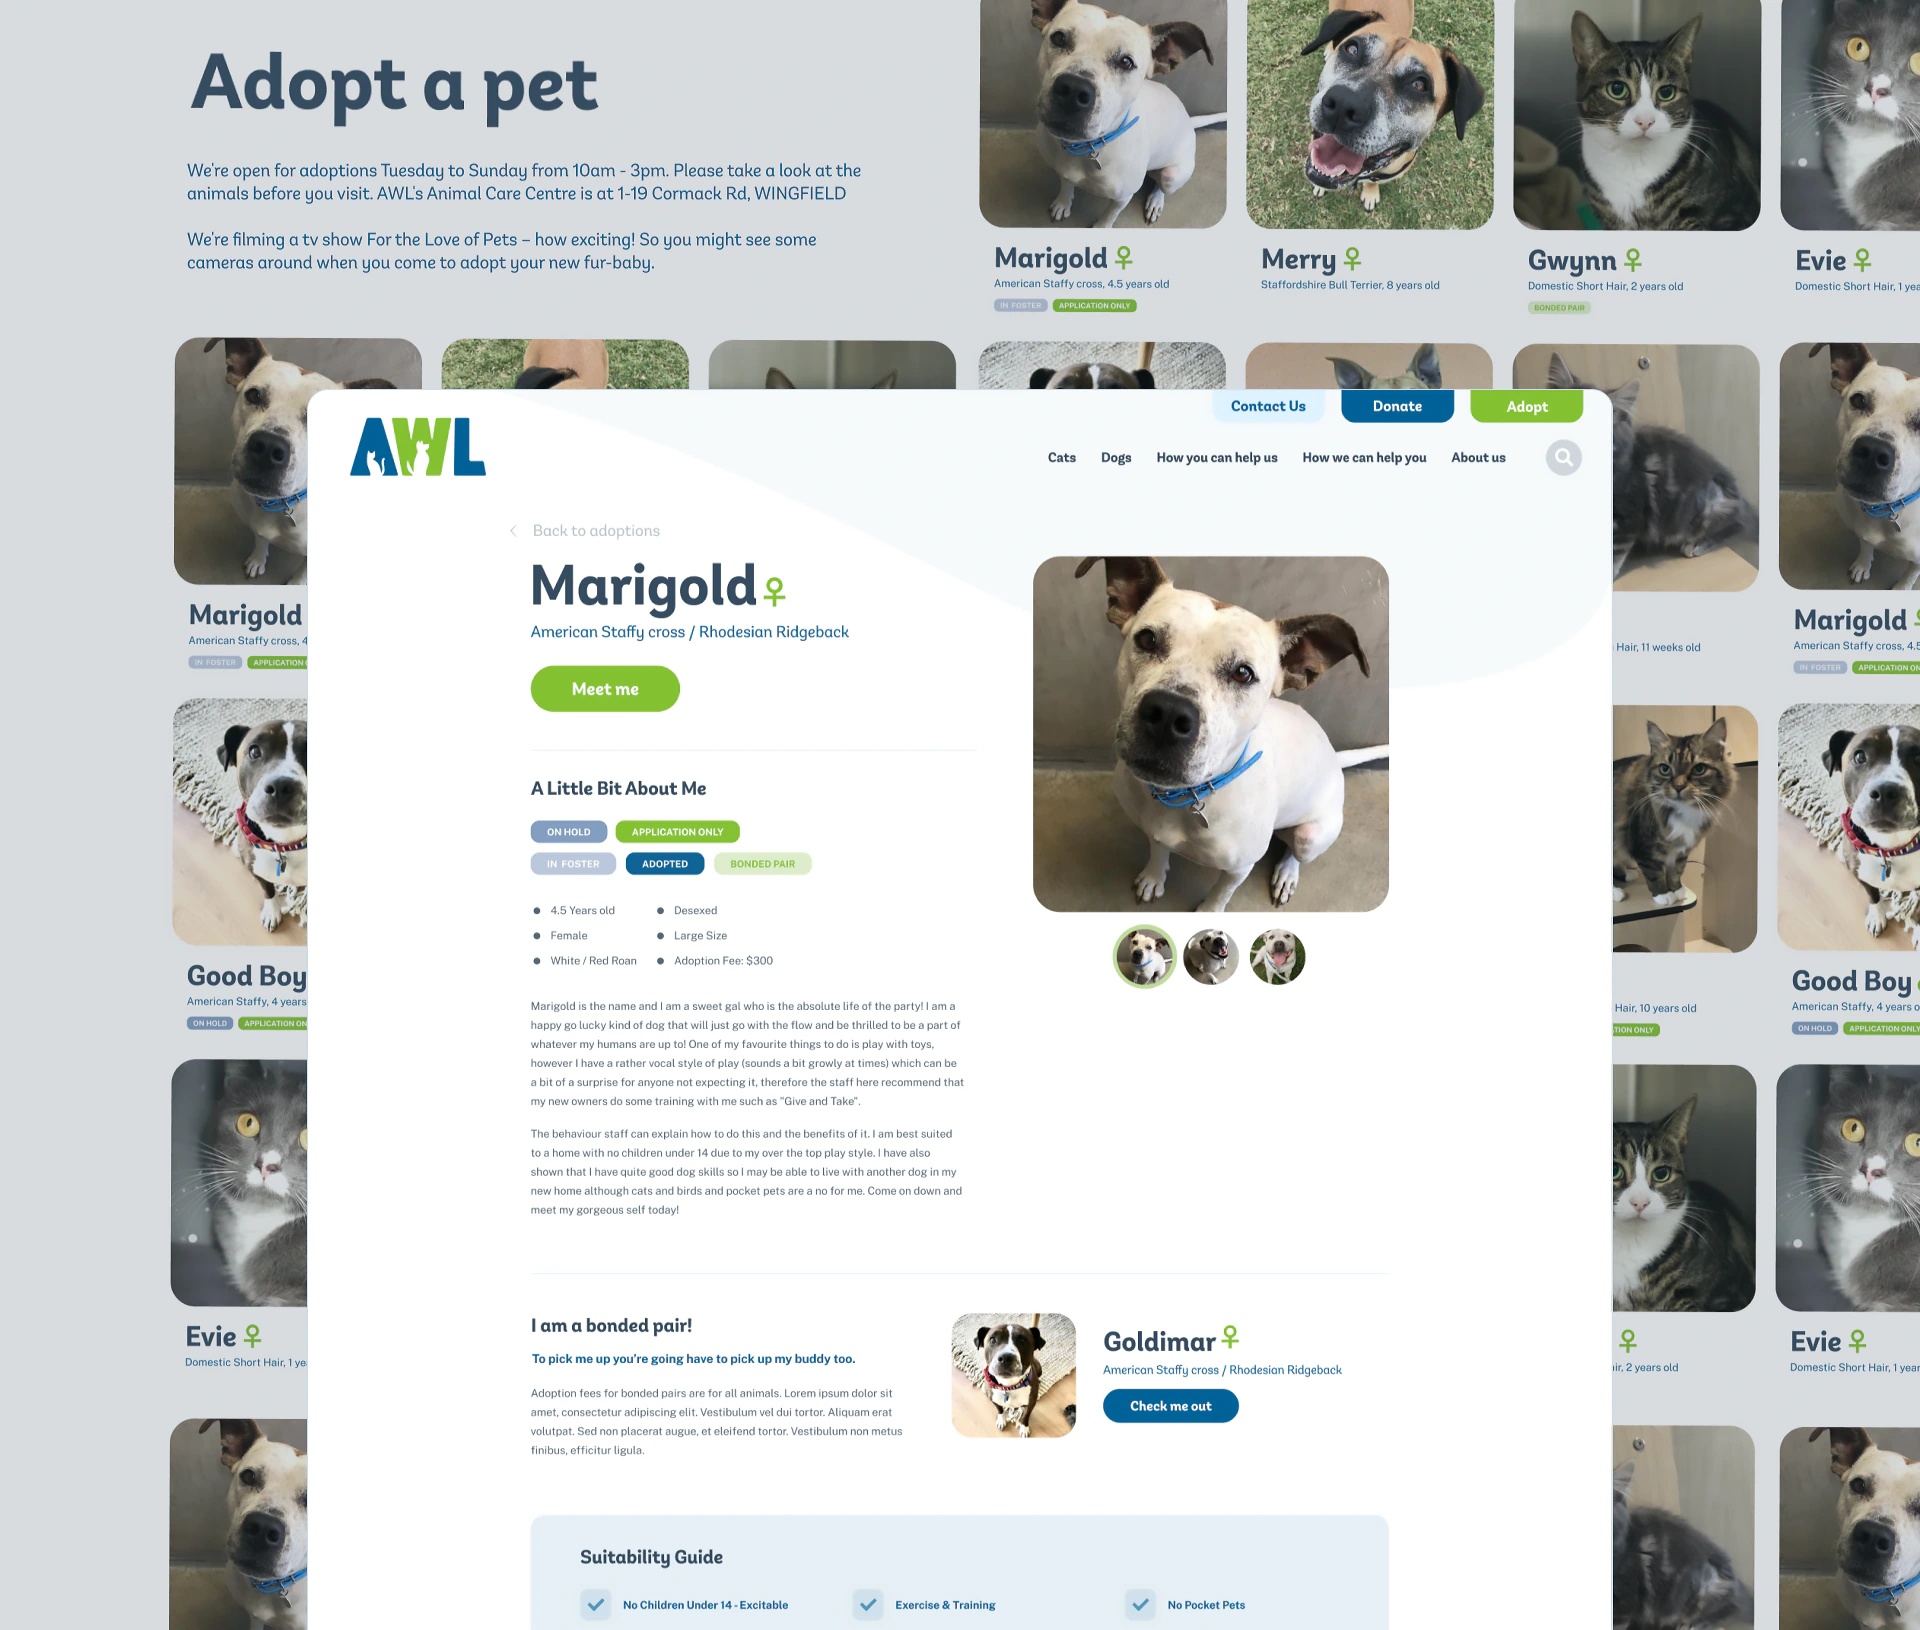 Animal Welfare League website adopt a pet and listing